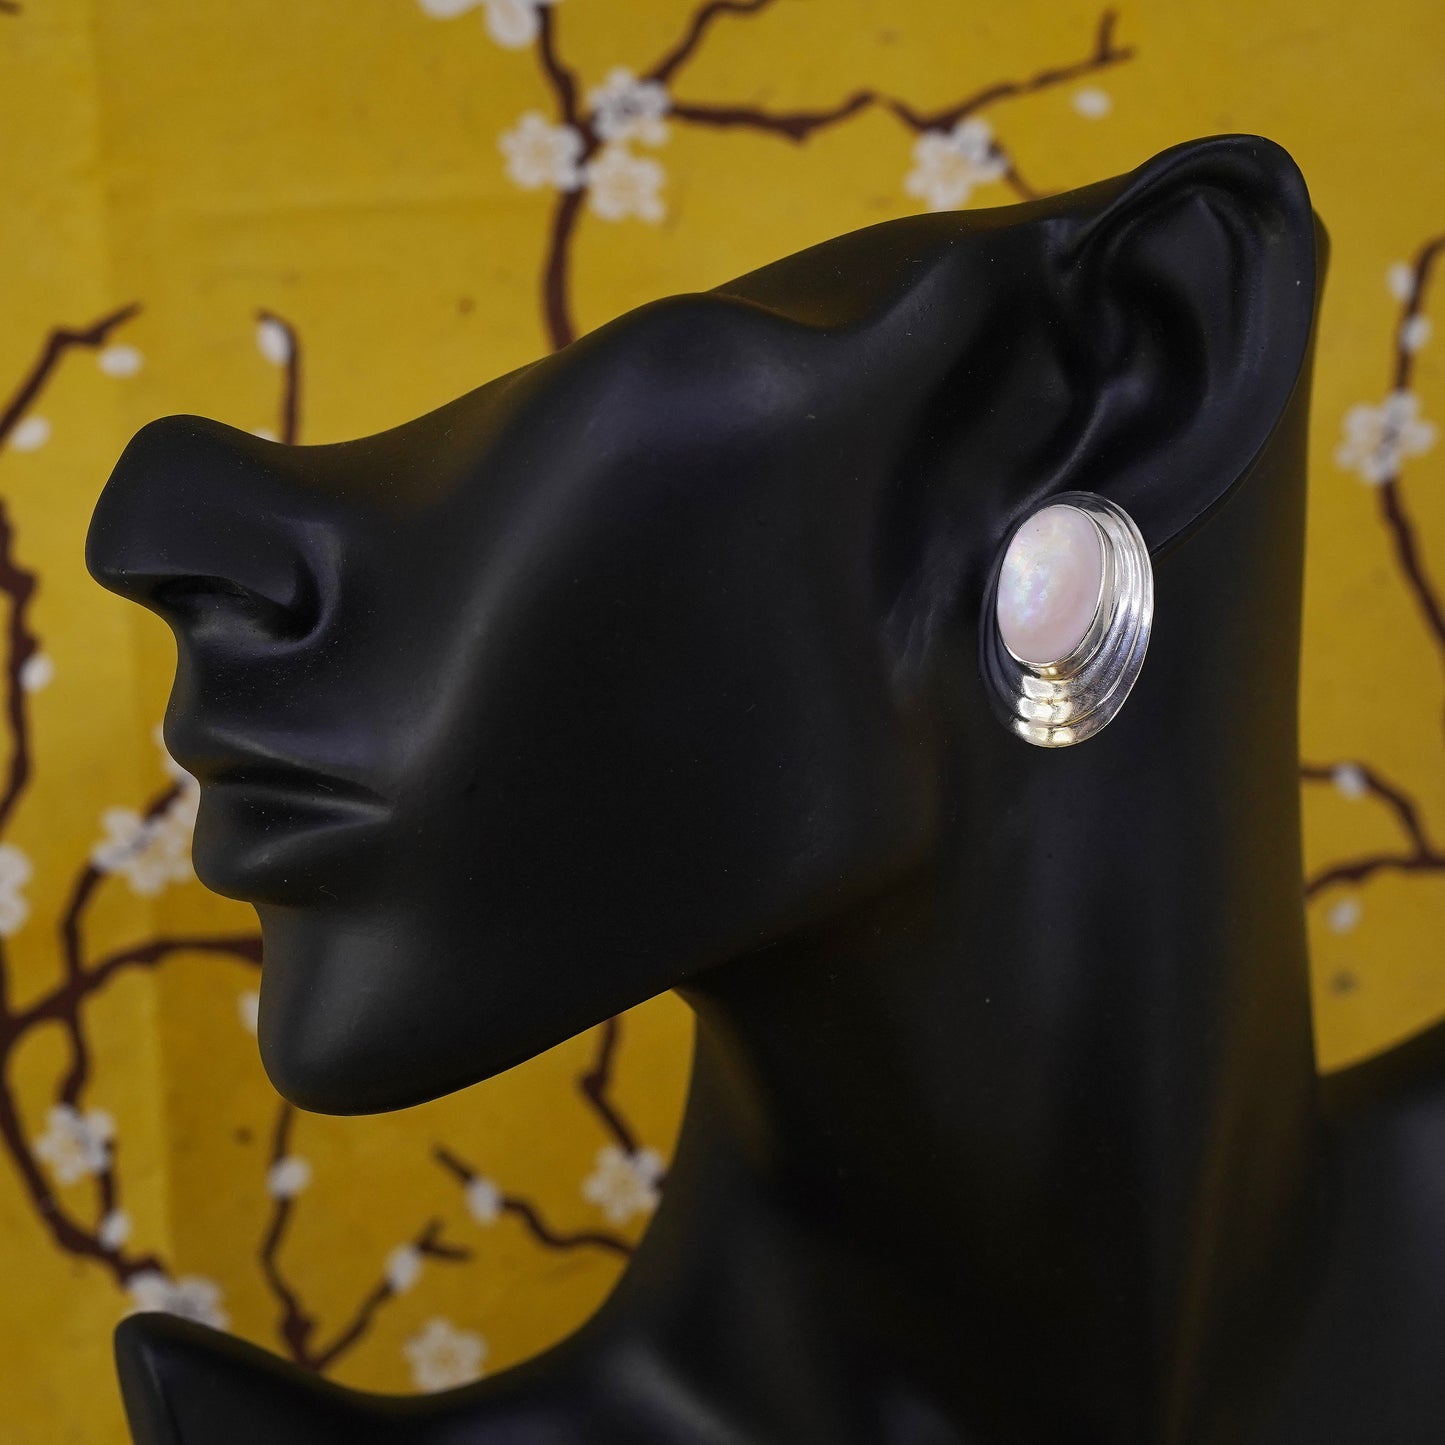 Vintage Sterling silver handmade earrings, 925 oval studs pink mother of pearl